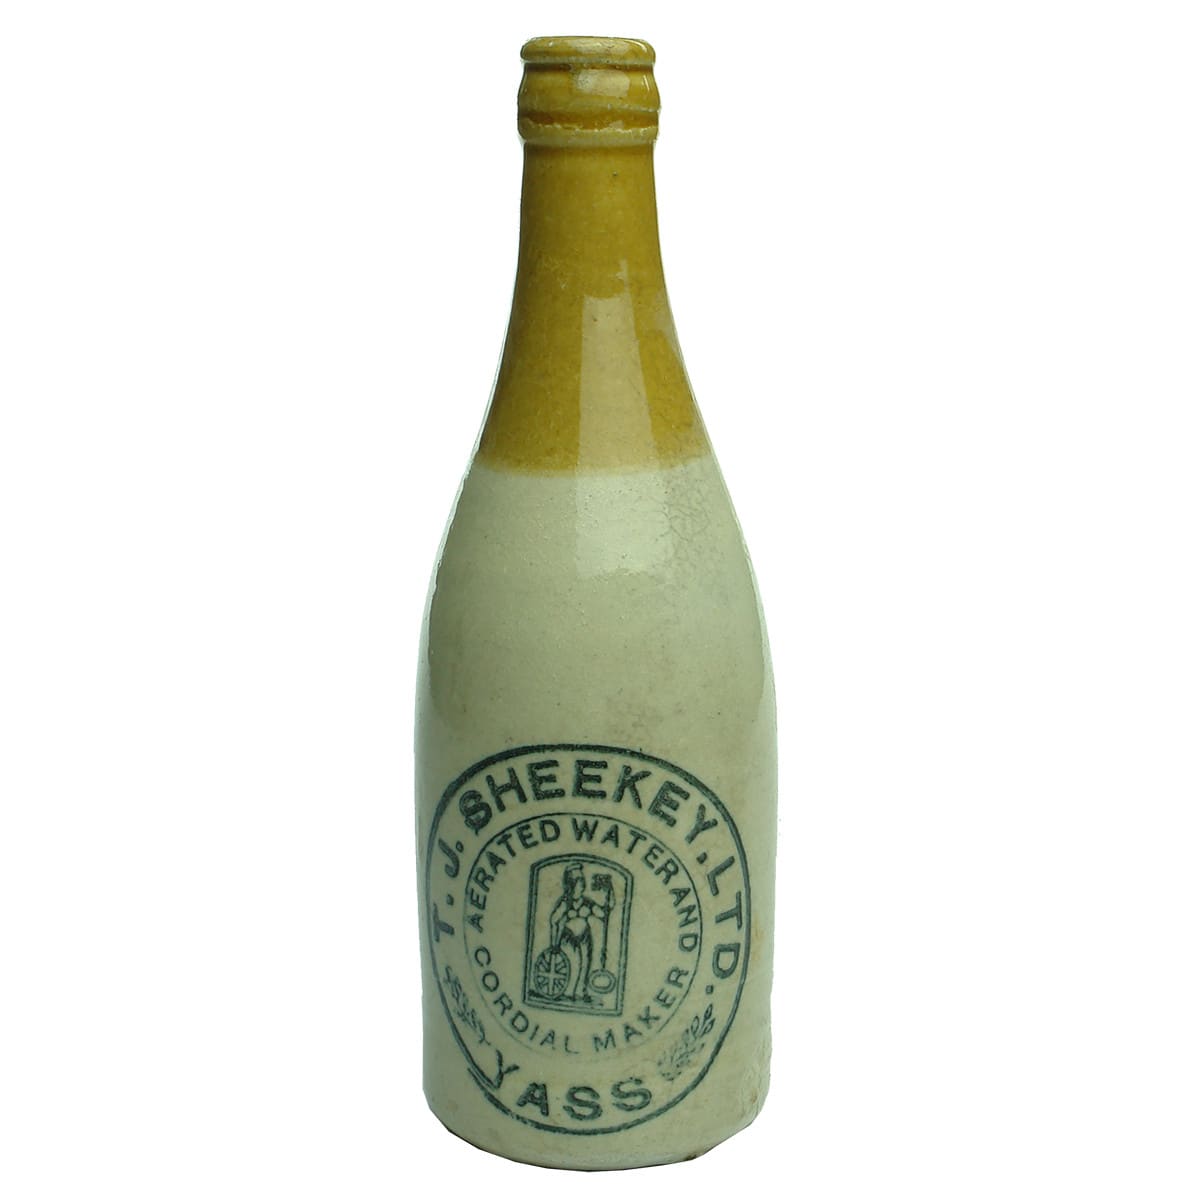 Ginger Beer. T. J. Sheekey Ltd., Yass. Crown Seal. Tan Top. (New South Wales)